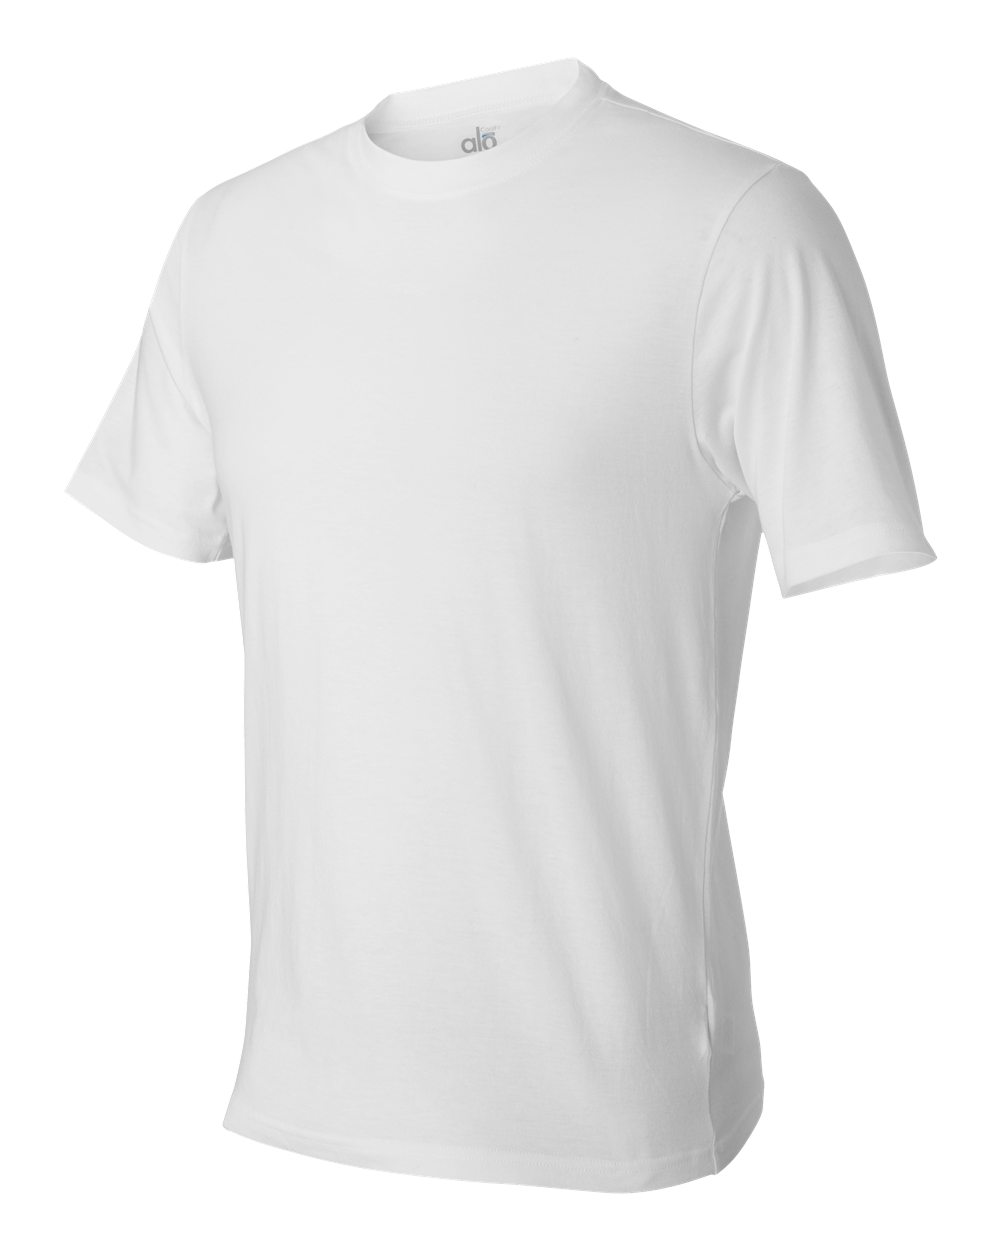 alo - Short Sleeve Bamboo T-Shirt